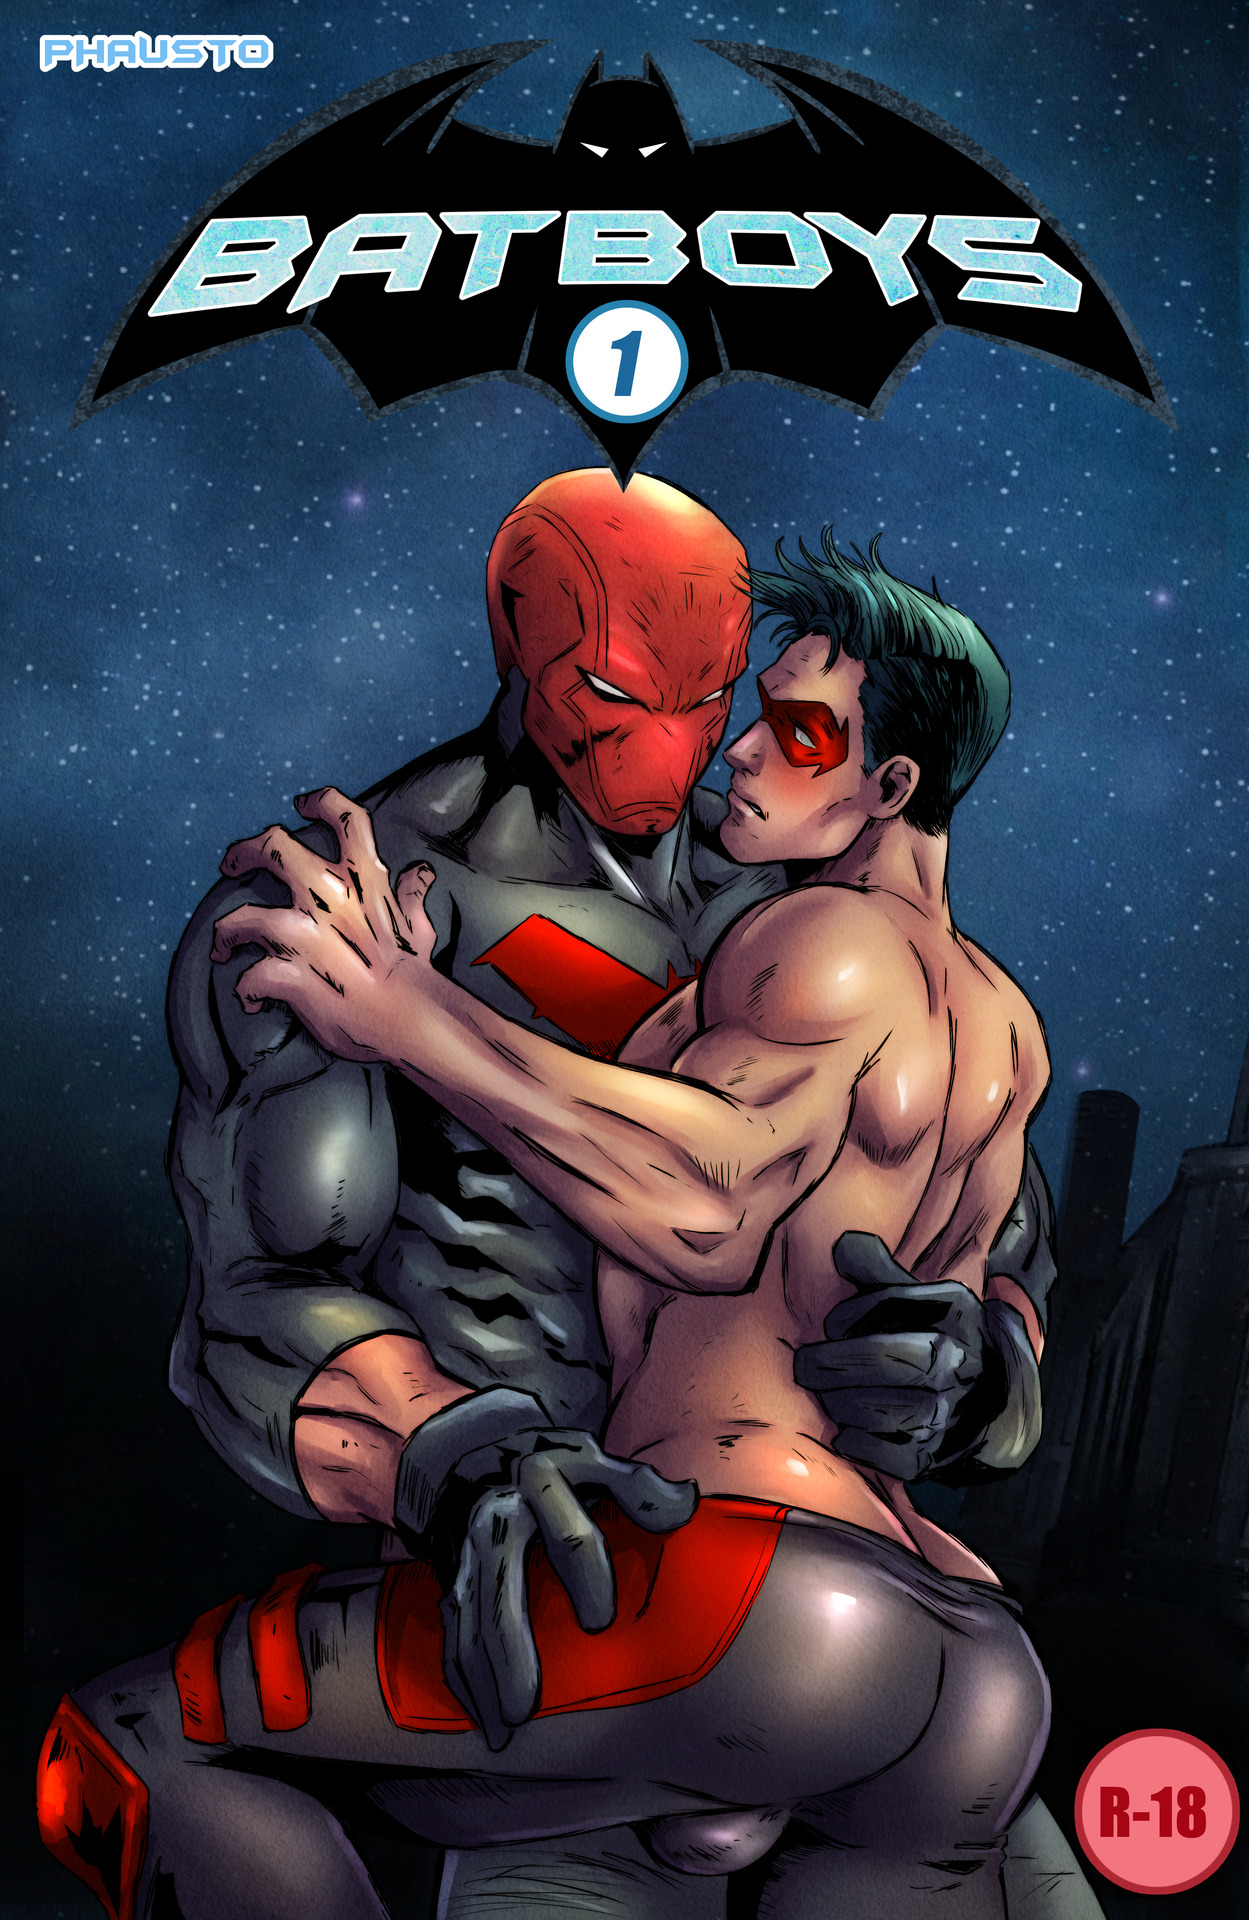 Furry Batman Porn - Batboys 01 - Gay Comix by Phausto - FreeAdultComix